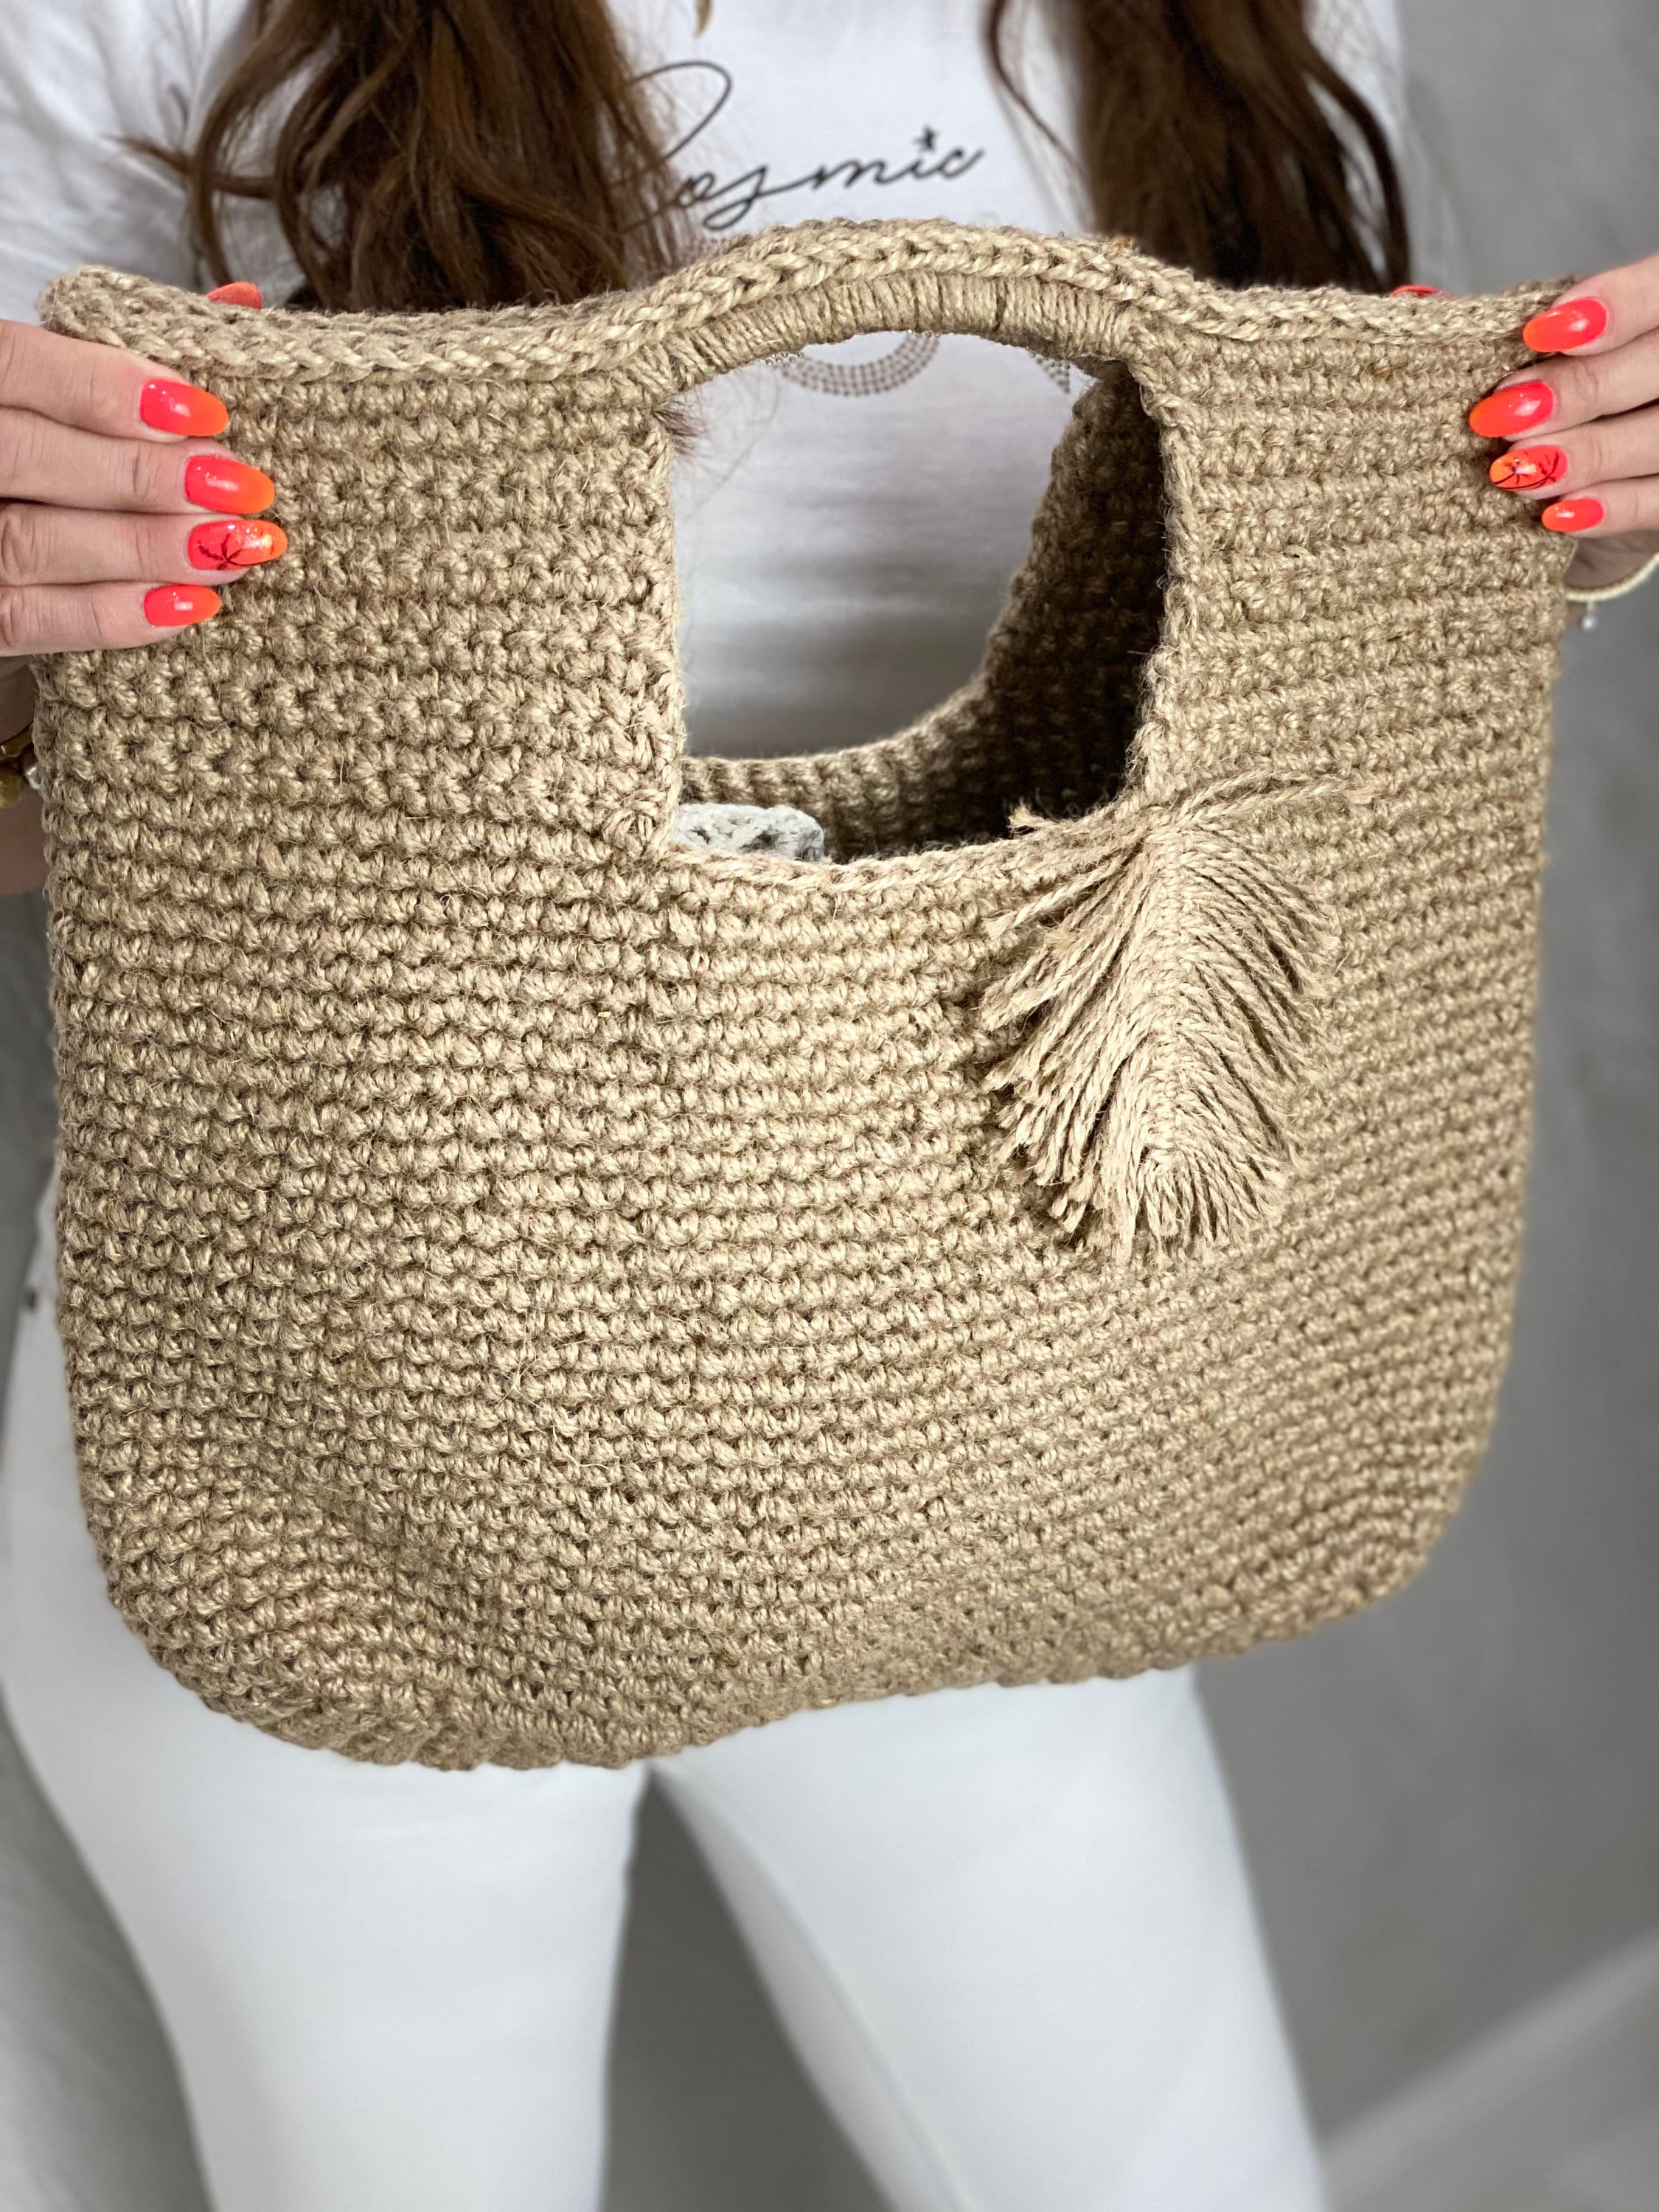 Crochet Jute Bag Square Eco Shopping Bag Crochet Tote Beach | Etsy